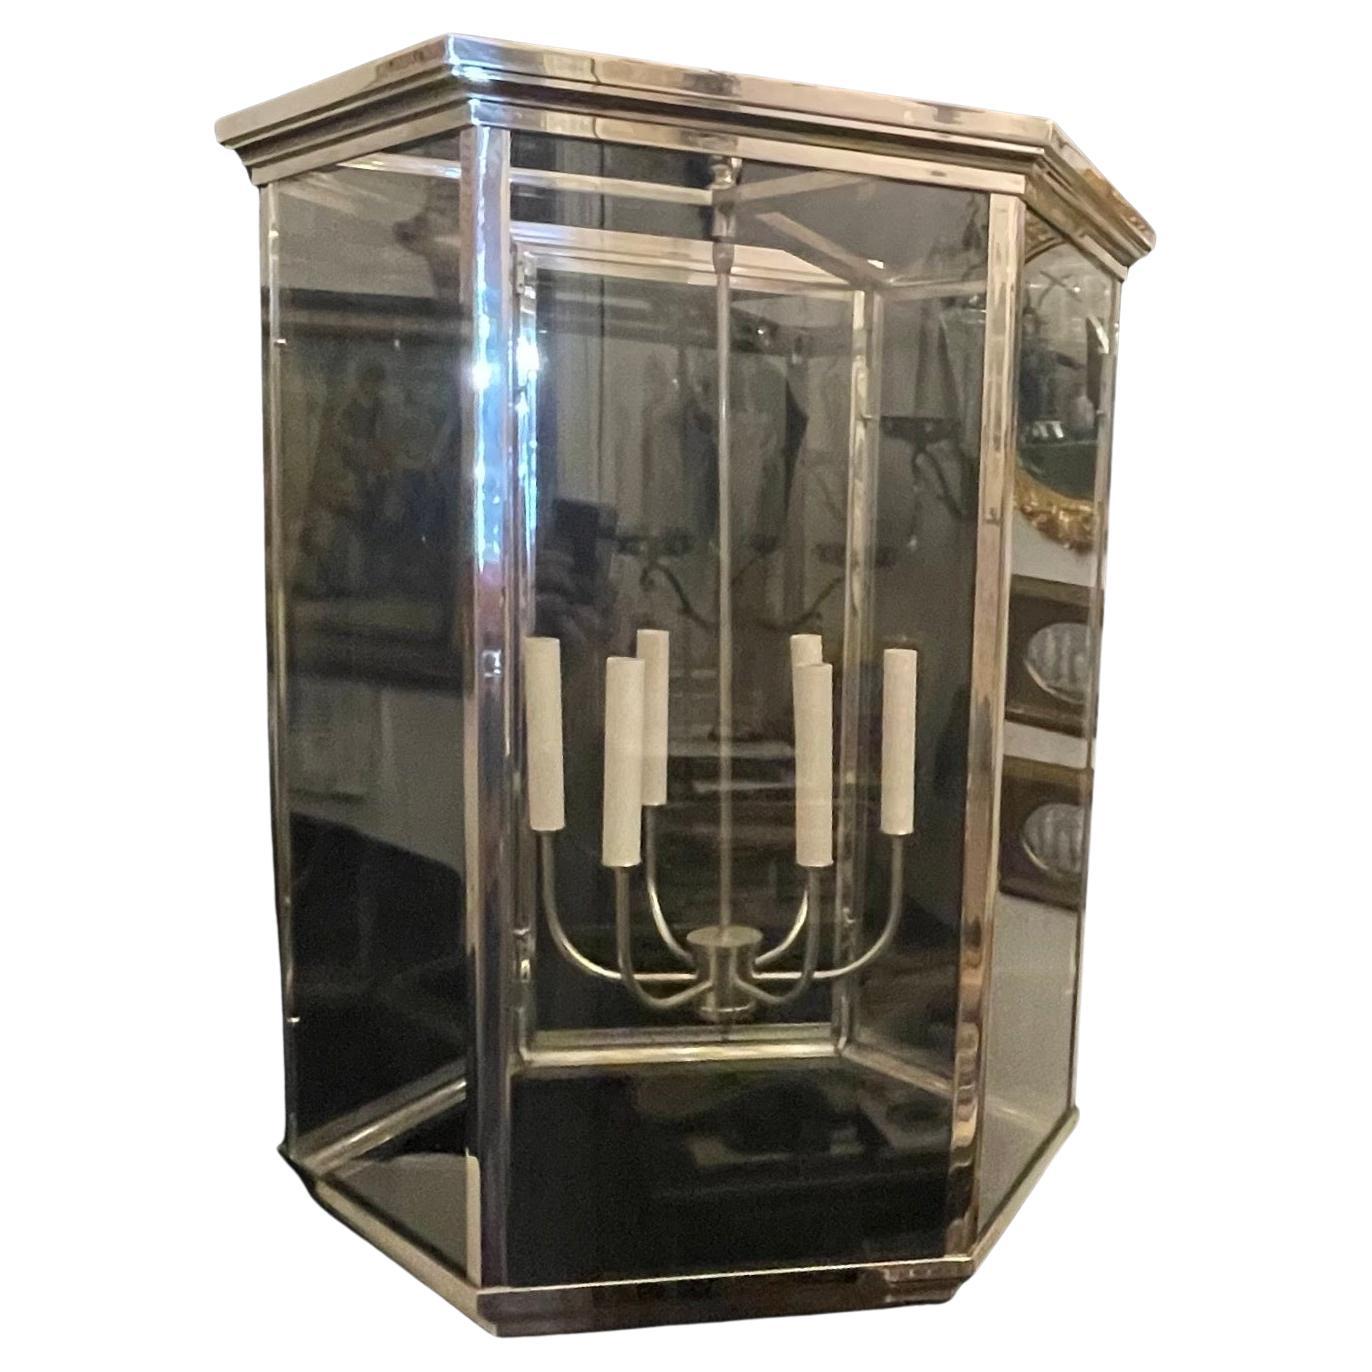 Sleek Modern Art Deco Large Polished Nickel Octagonal Glass Lantern Fixture